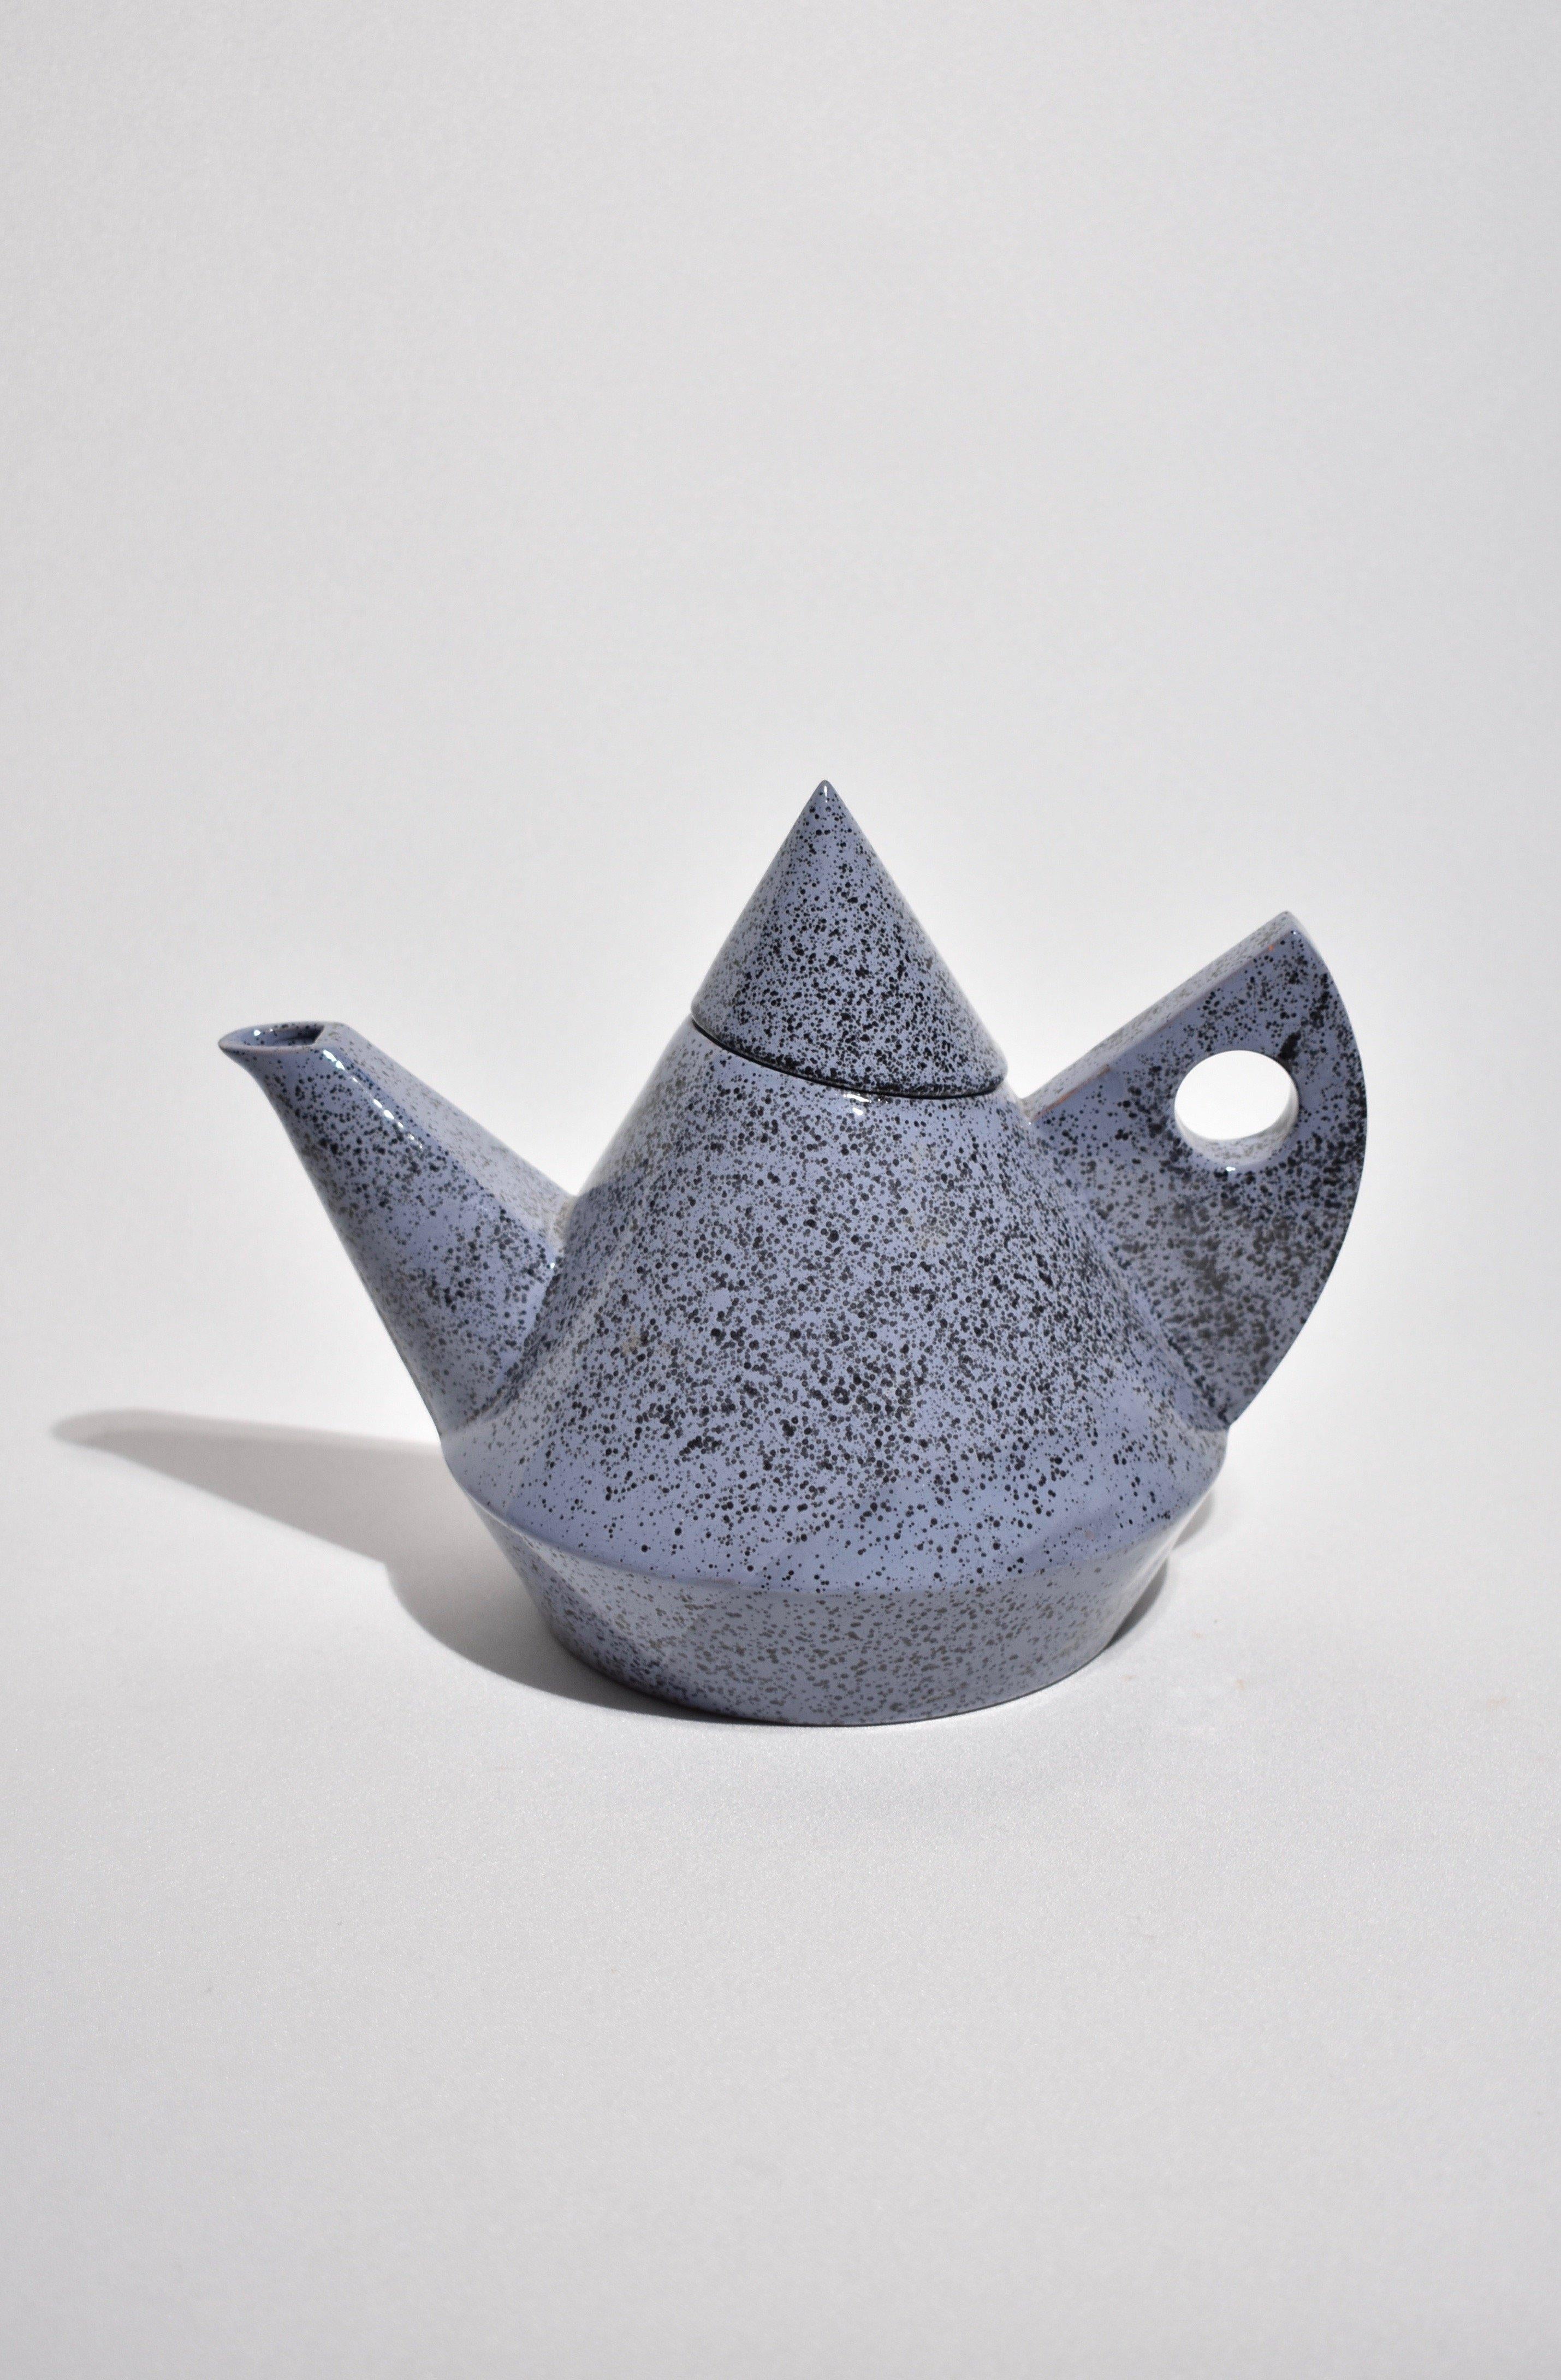 Rare, sculptural tea set in blue speckle pattern. Includes lightweight enamelware teapot and ceramic lidded sugar bowl, signed. 

Dimensions: 
Teapot measures 9.5” L, 6” W, 7” H. 
Sugar bowl measures 5” W, 4.25” H.